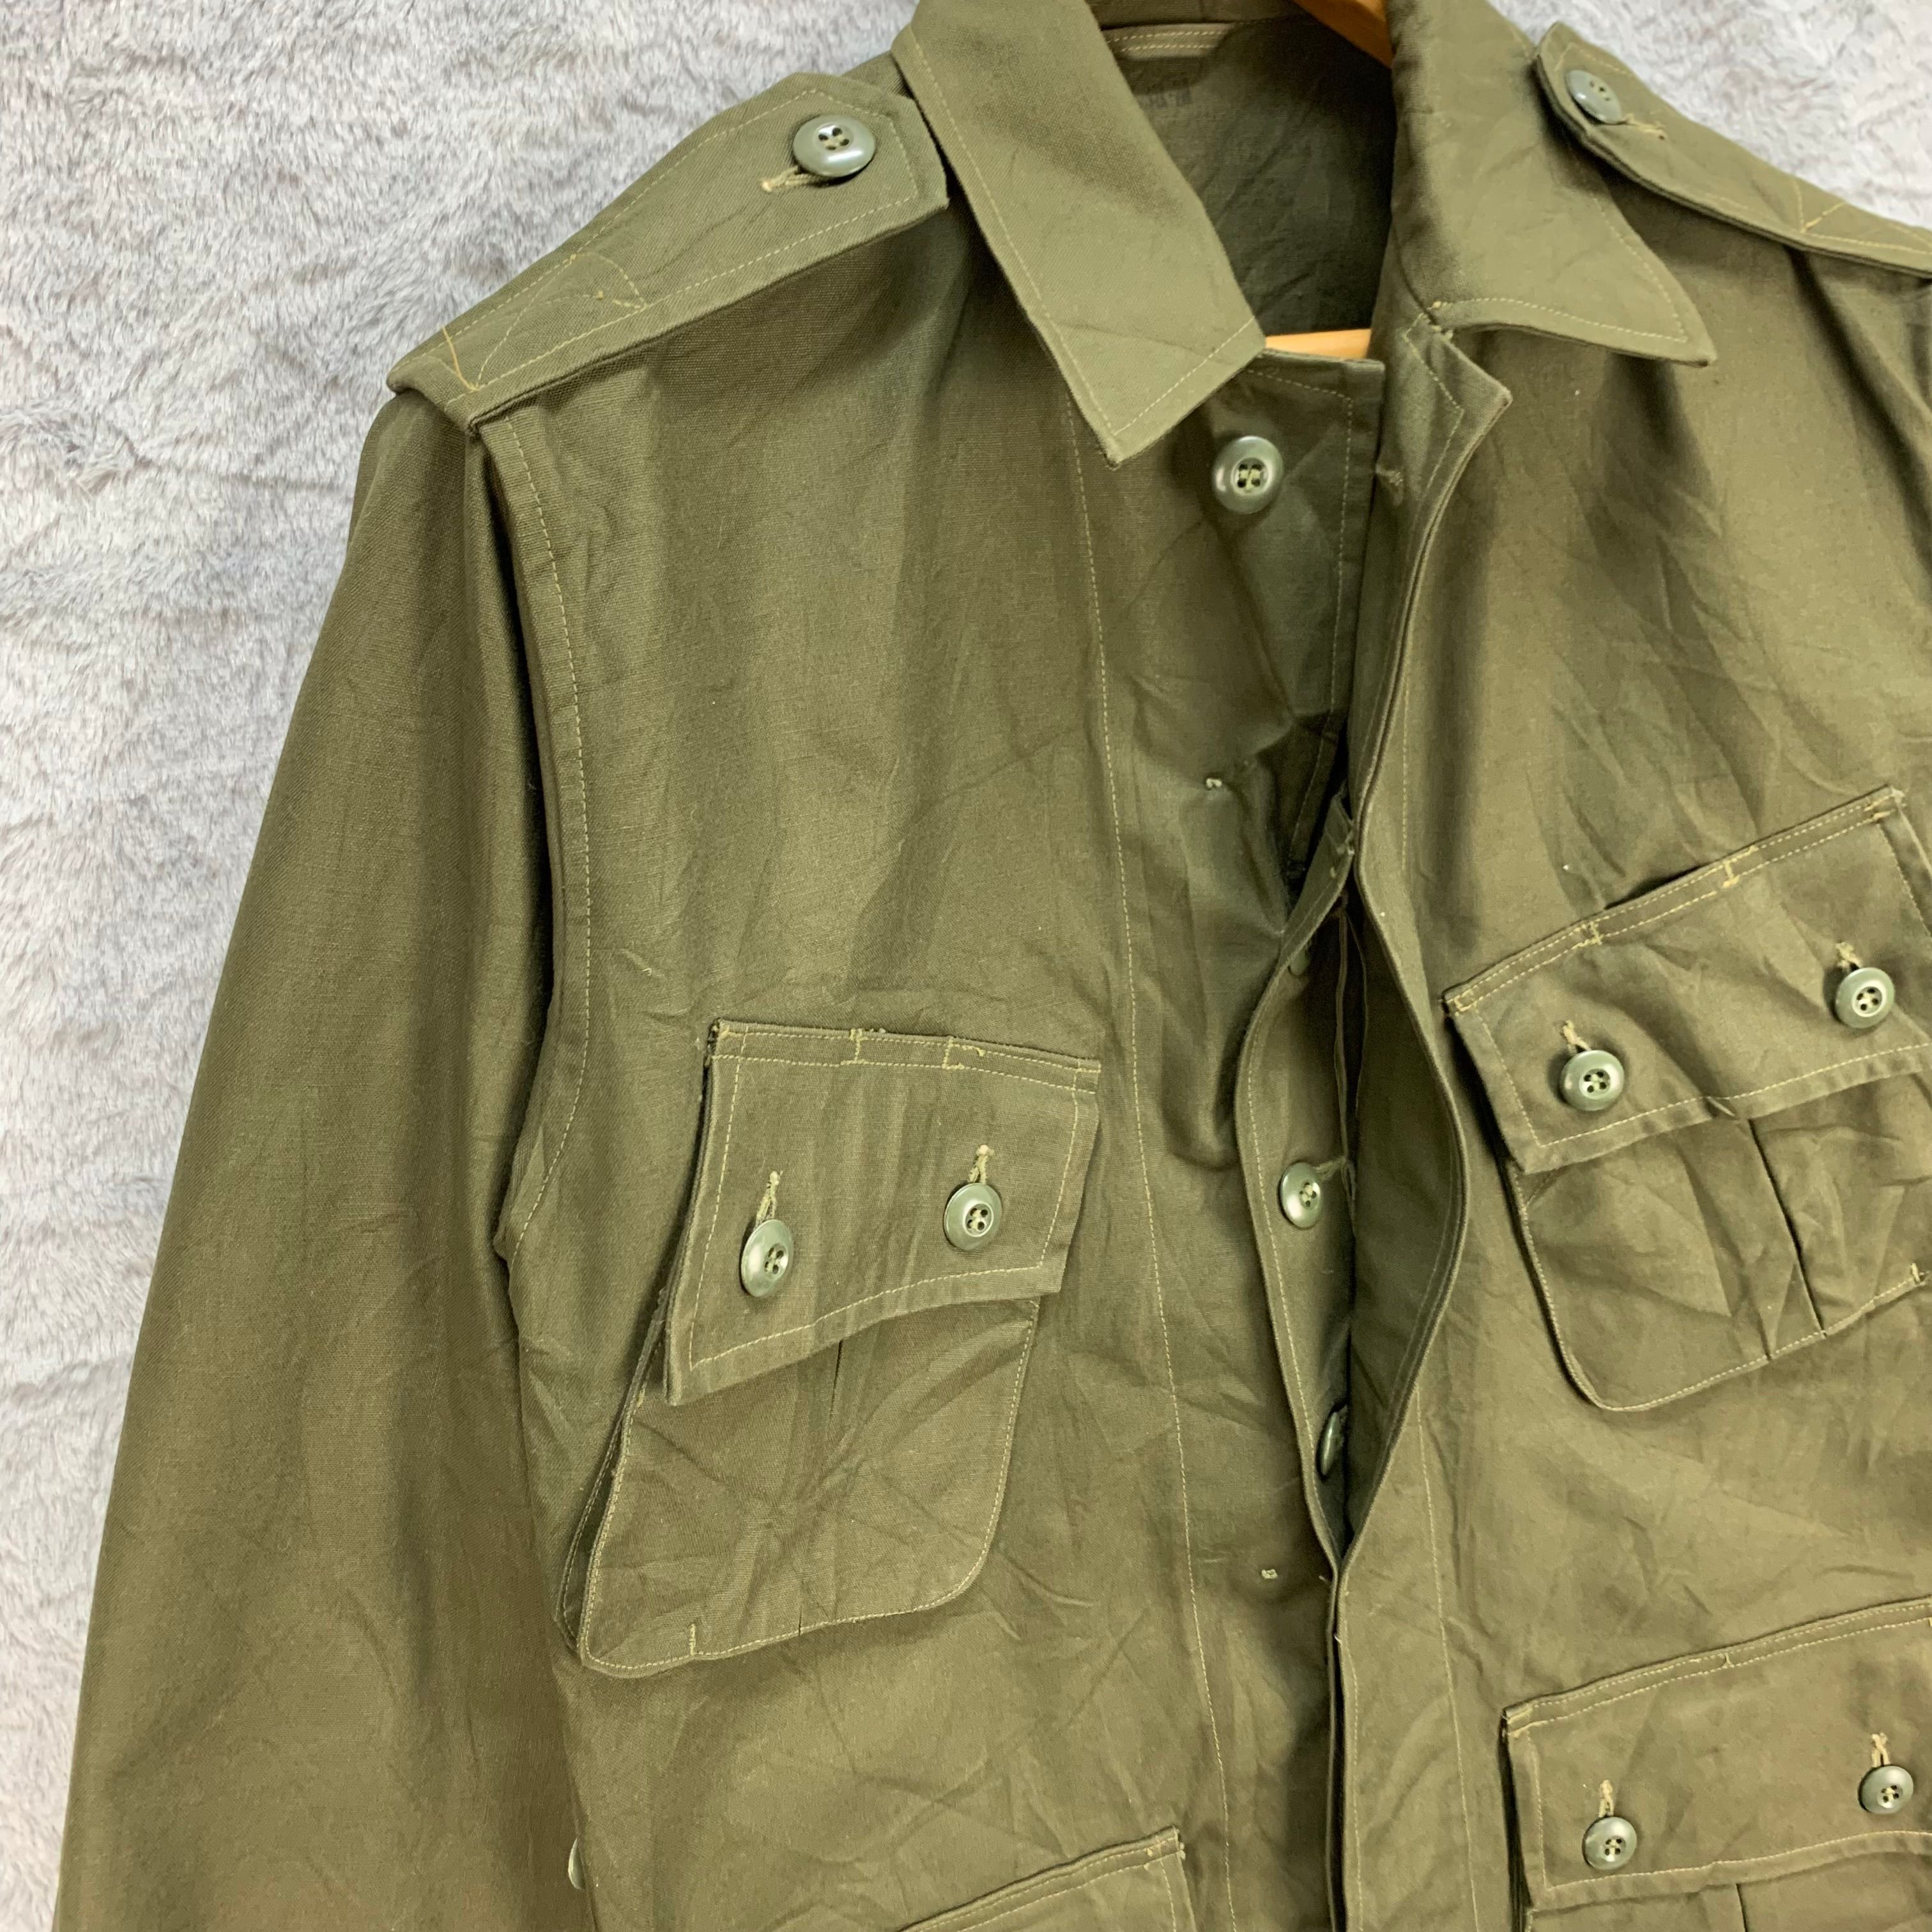 Vintage - Army Uniform Military Field Jacket / Chore Jacket #4400-152 - 6